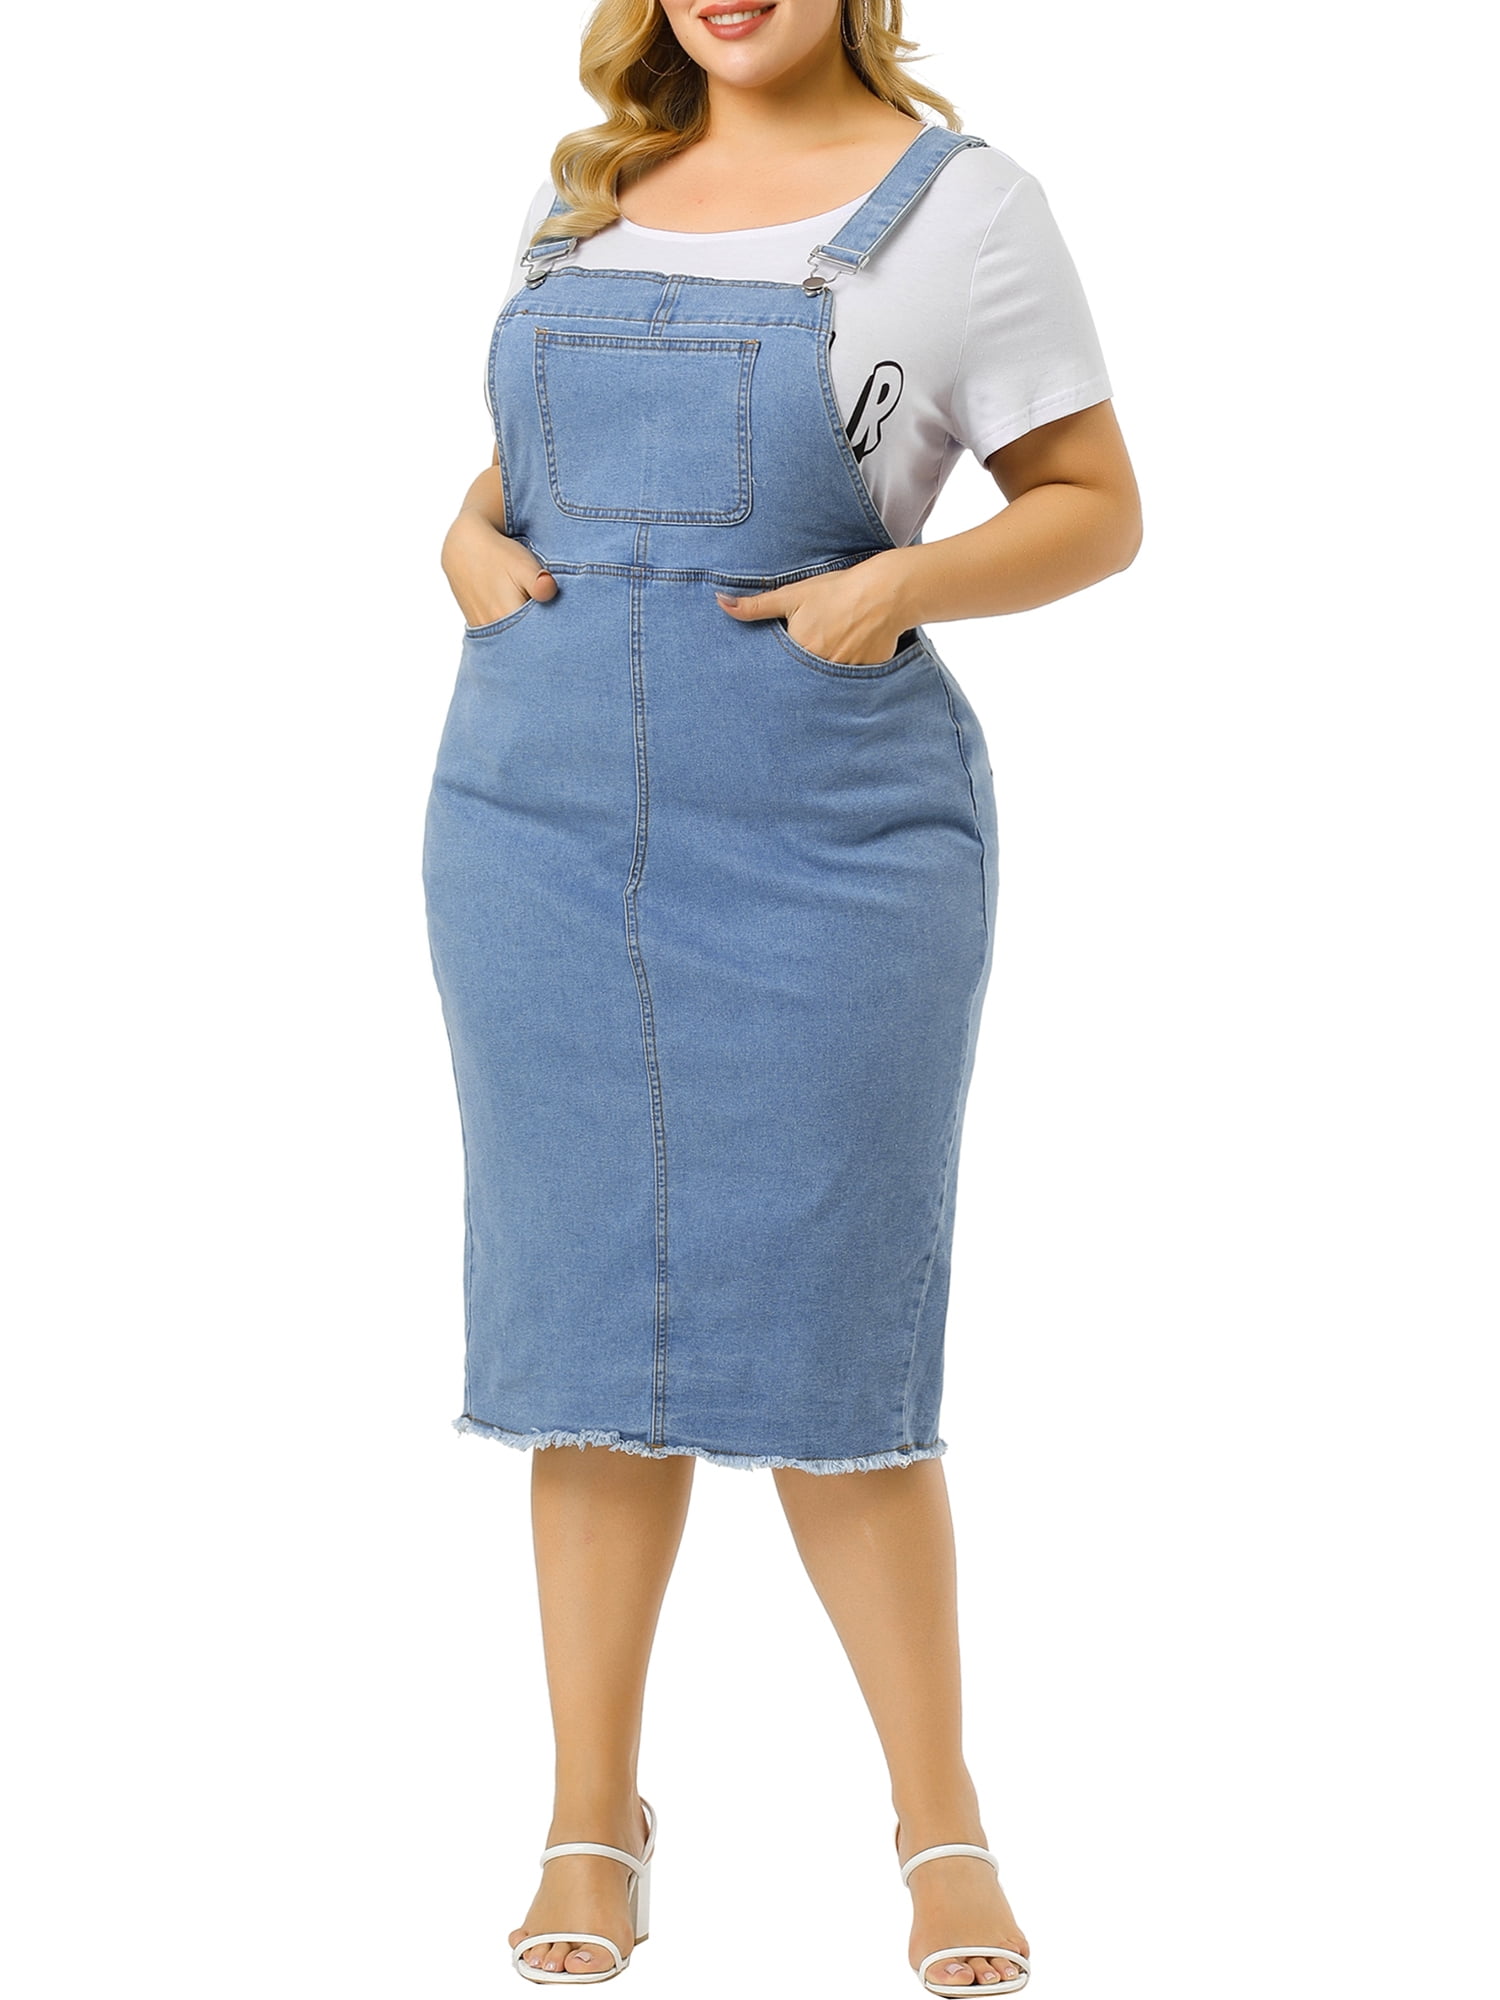 Efternavn Værdiløs suffix Agnes Orinda Women's Plus Size Adjustable Strap Back Suspender Skirt Raw  Hem Denim Dress - Walmart.com